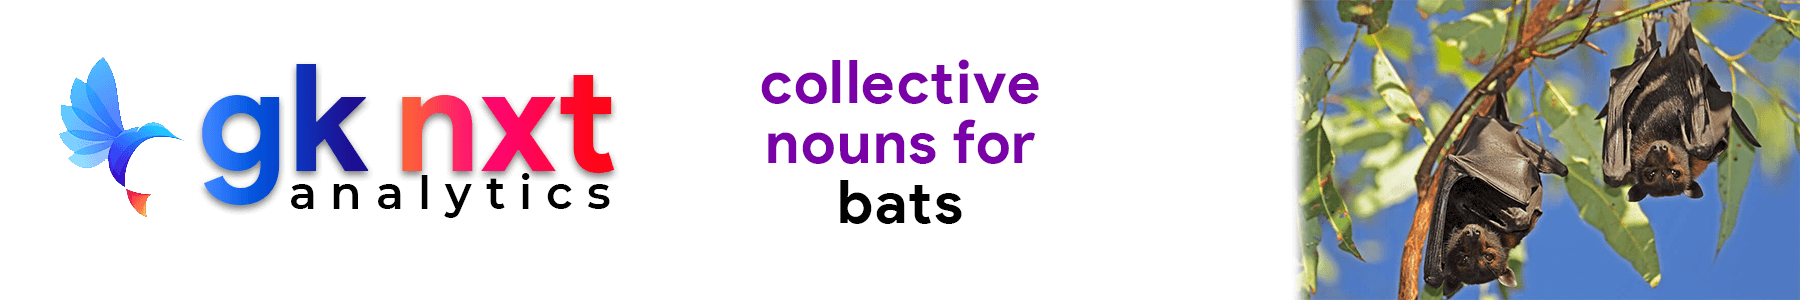 Collective Nouns for bats